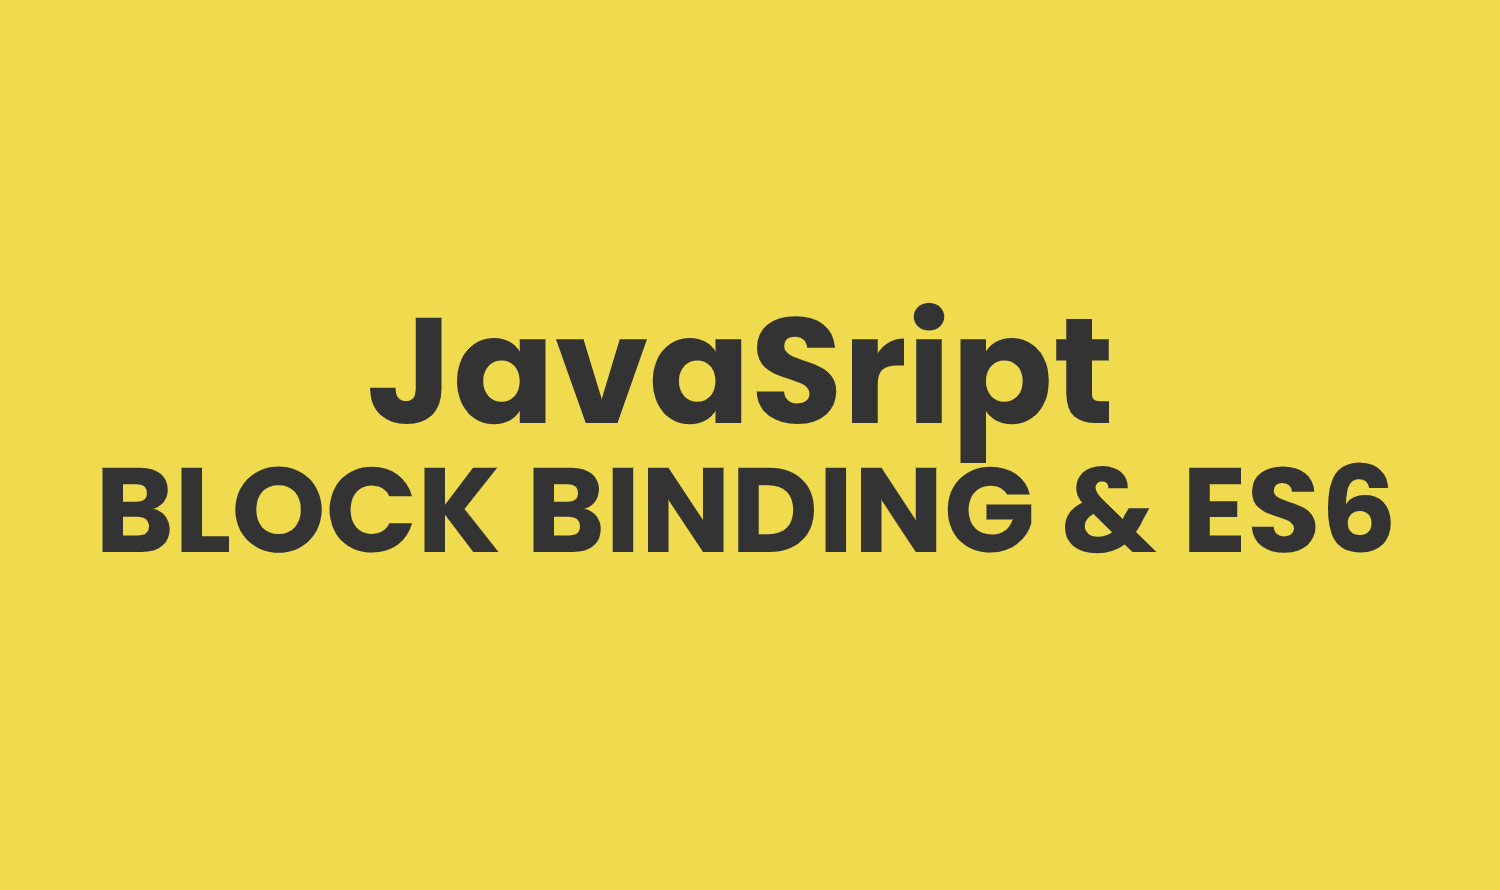 JavaScript Block Bindings and ES6 every developer must know!